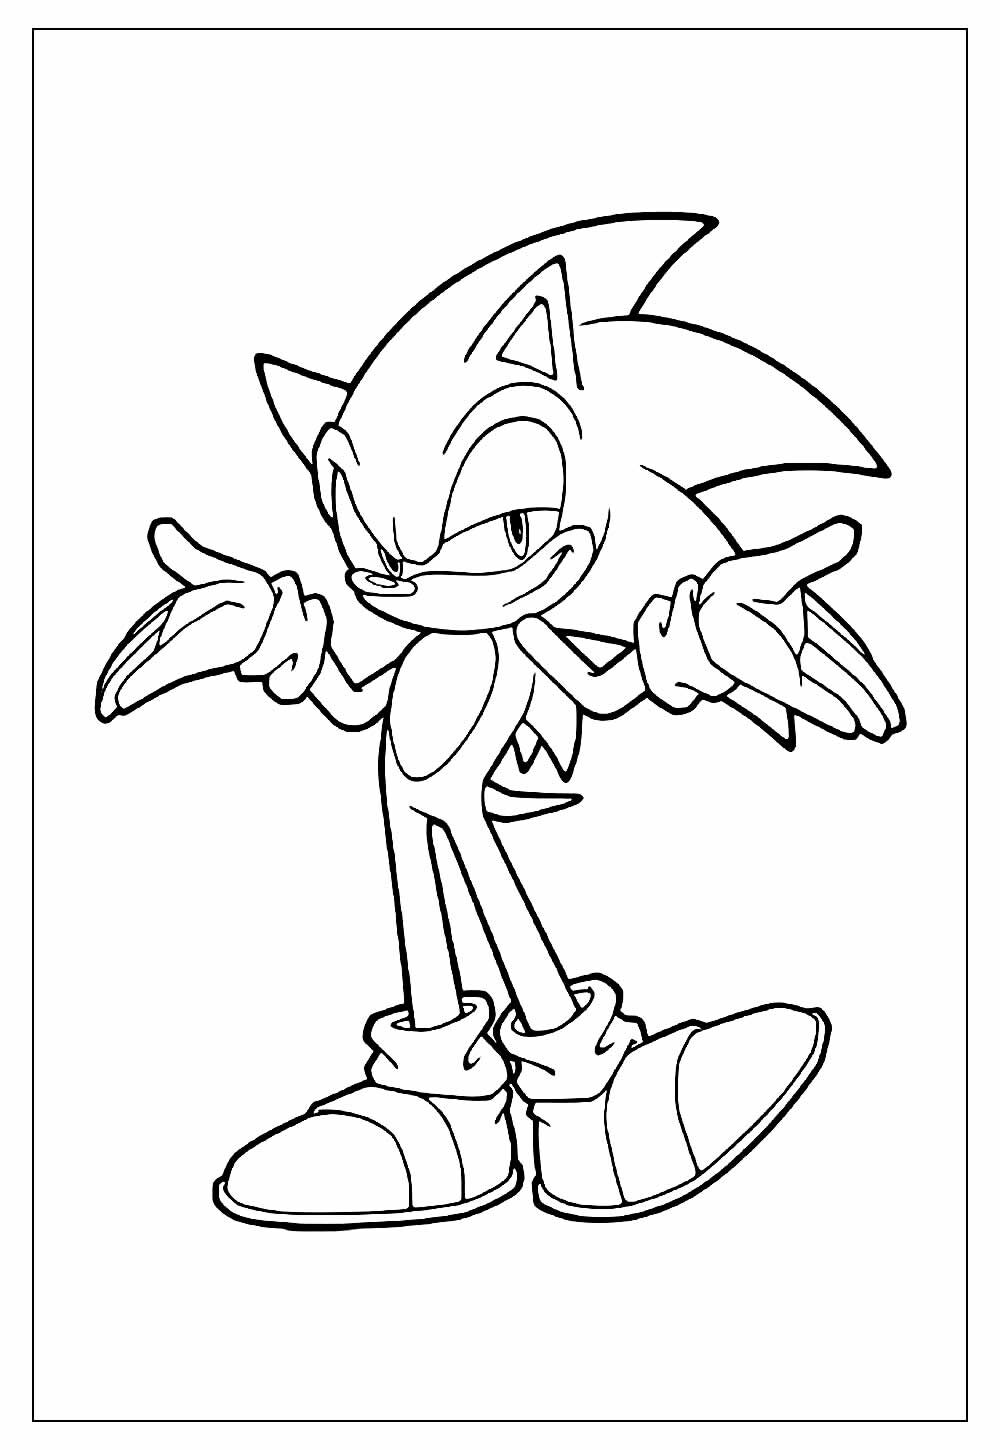 Desenhos de Sonic para colorir · Creative Fabrica